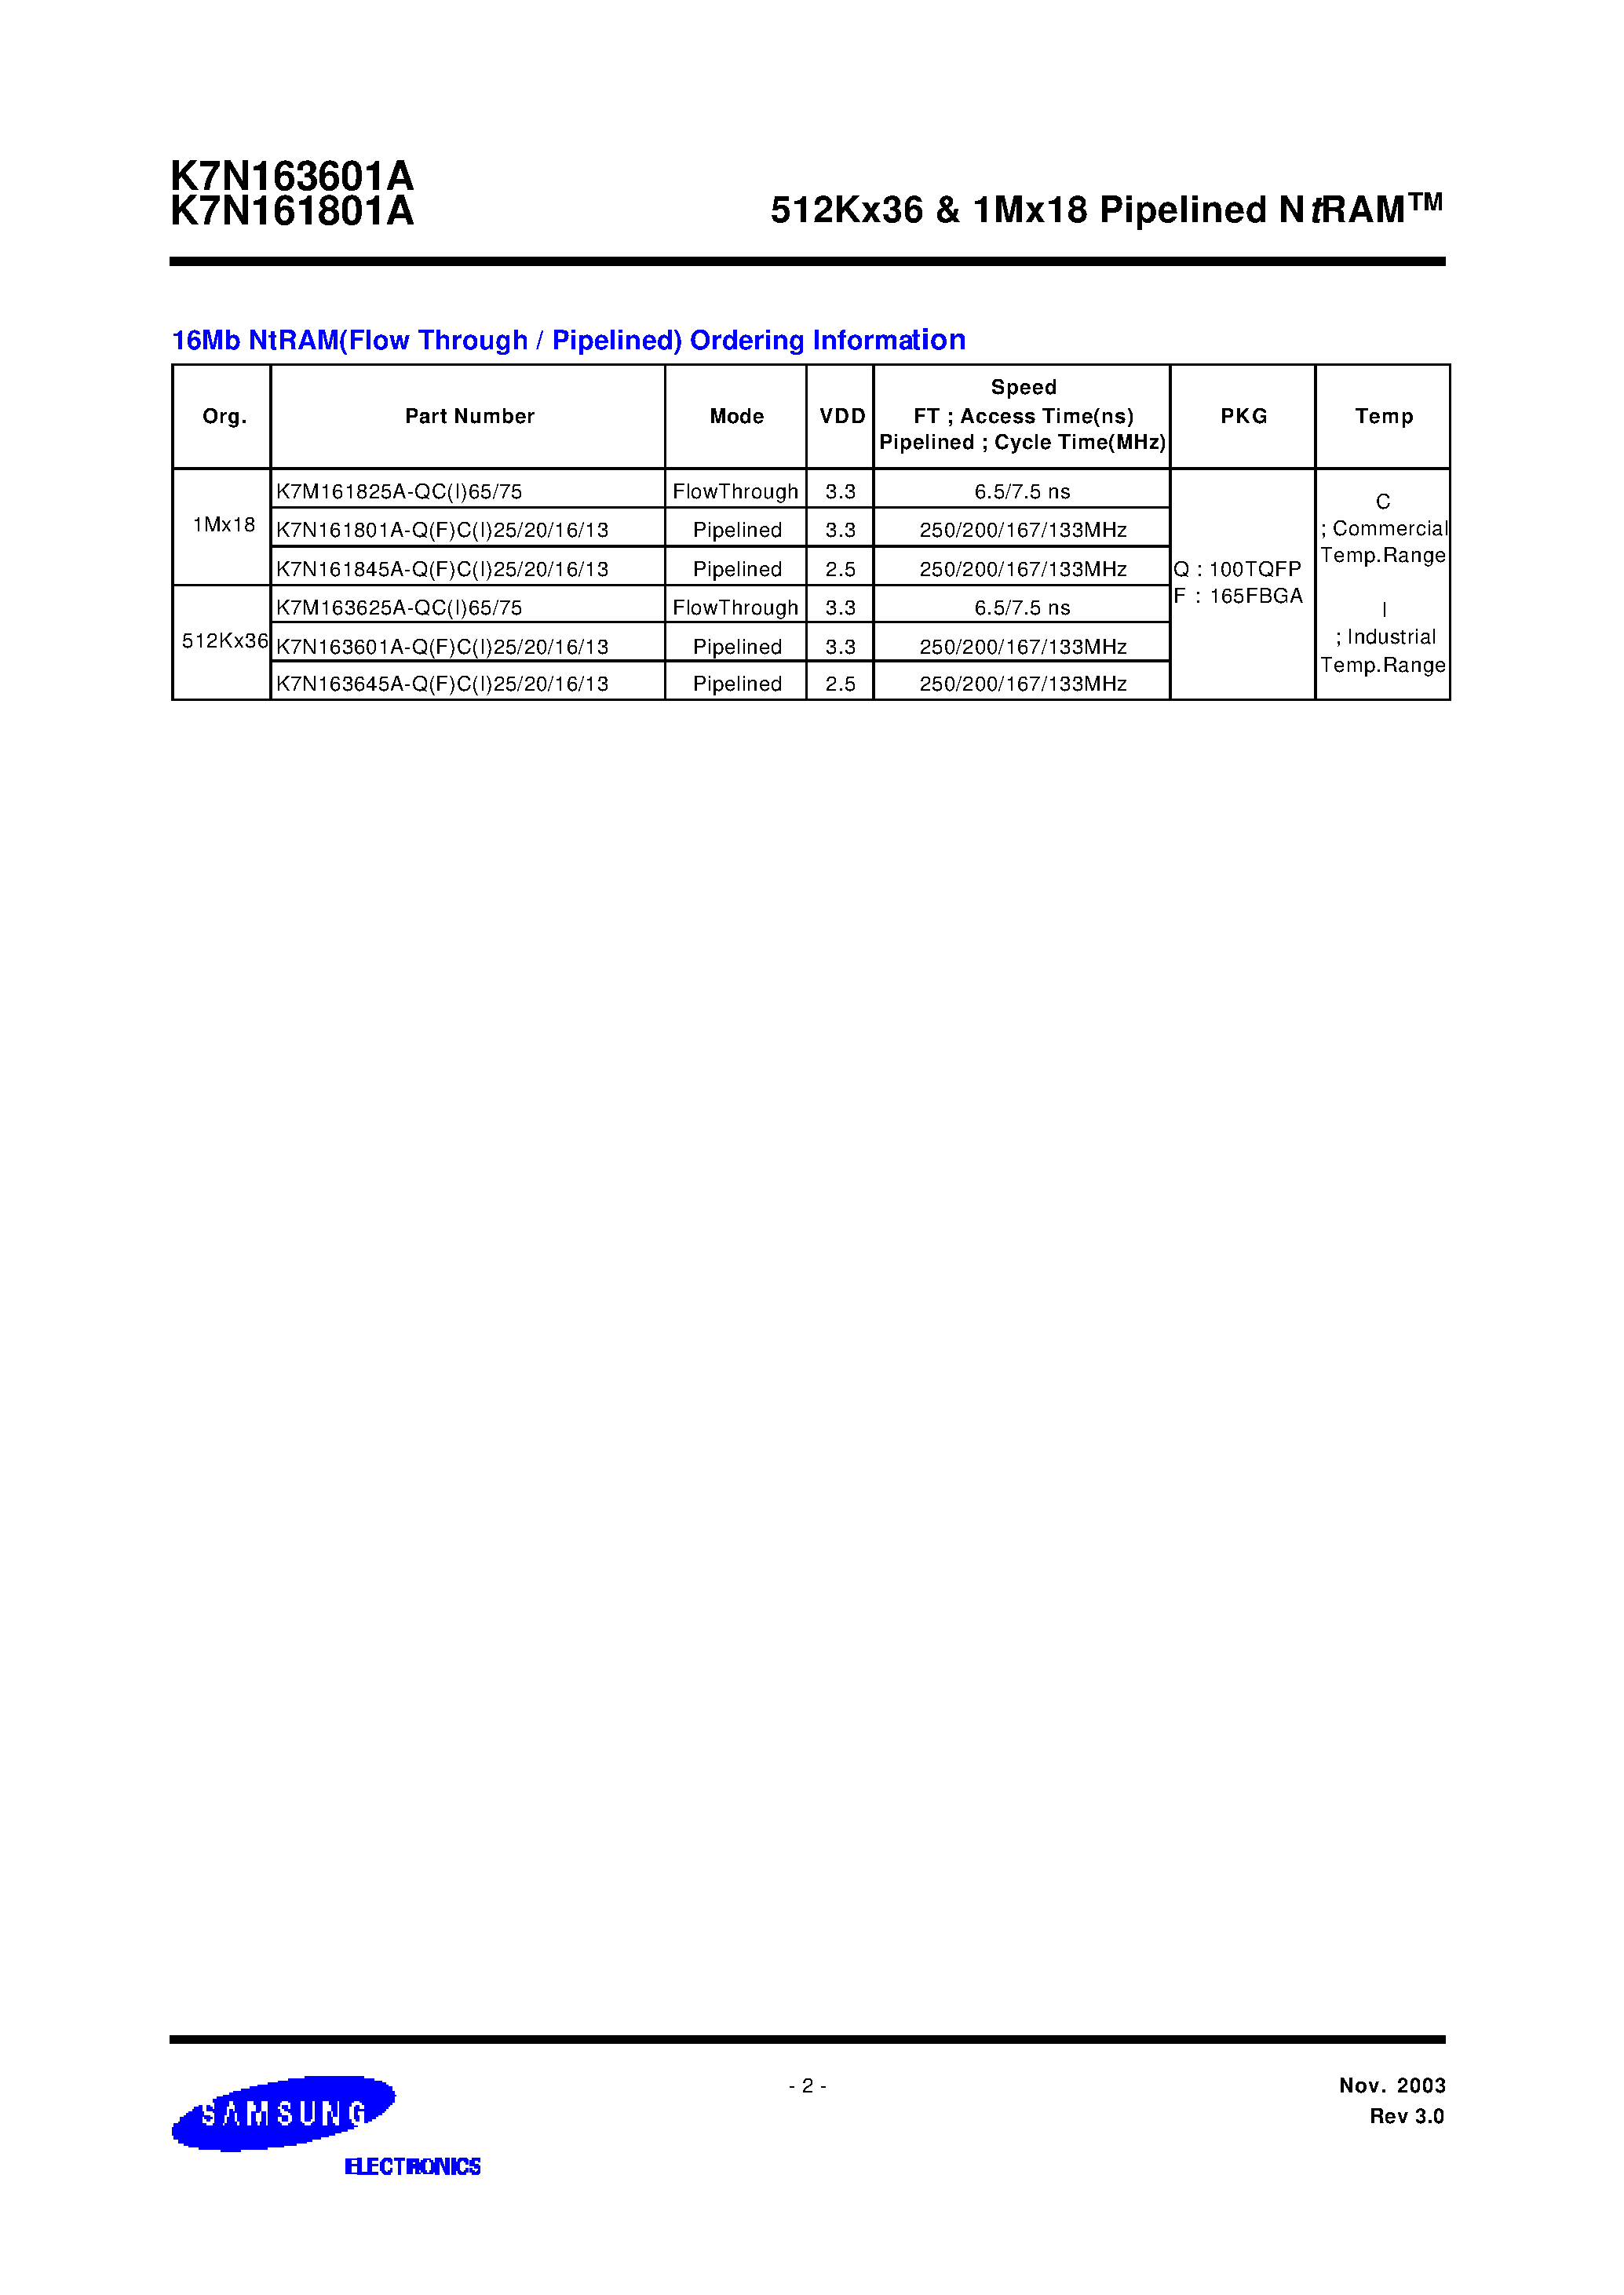 Datasheet K7N163645A-Q(F)C(I)20 - 512Kx36 & 1Mx18 Pipelined NtRAM page 2